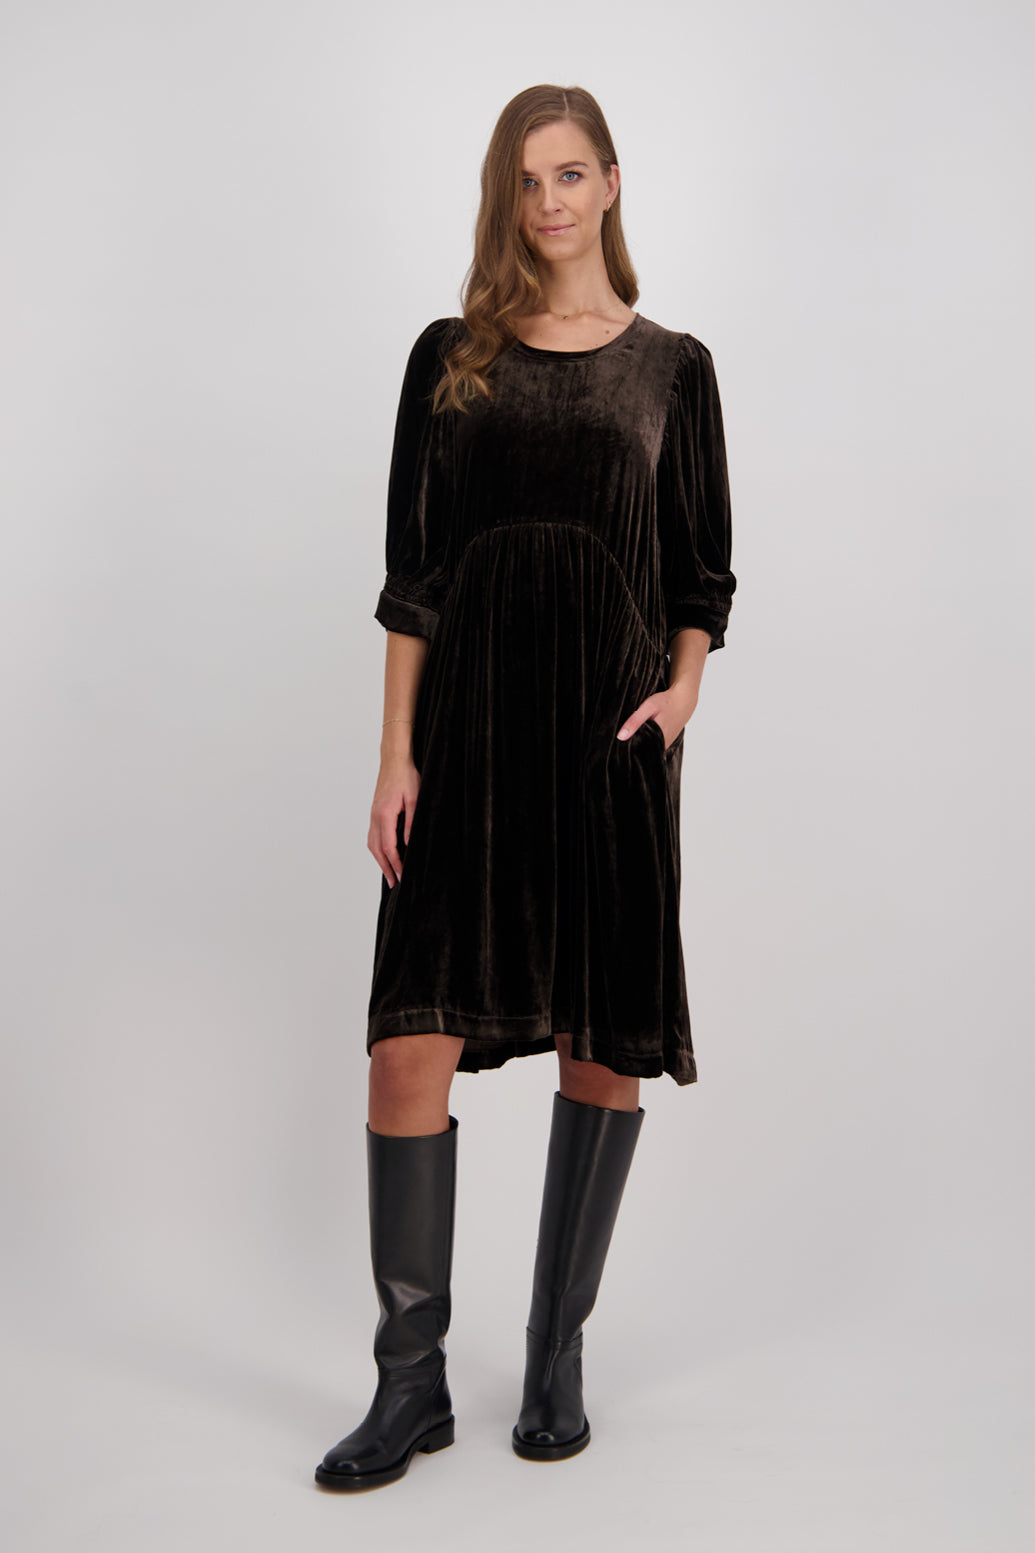 Cleopatra Velvet Knee-Length Dress - Chocolate